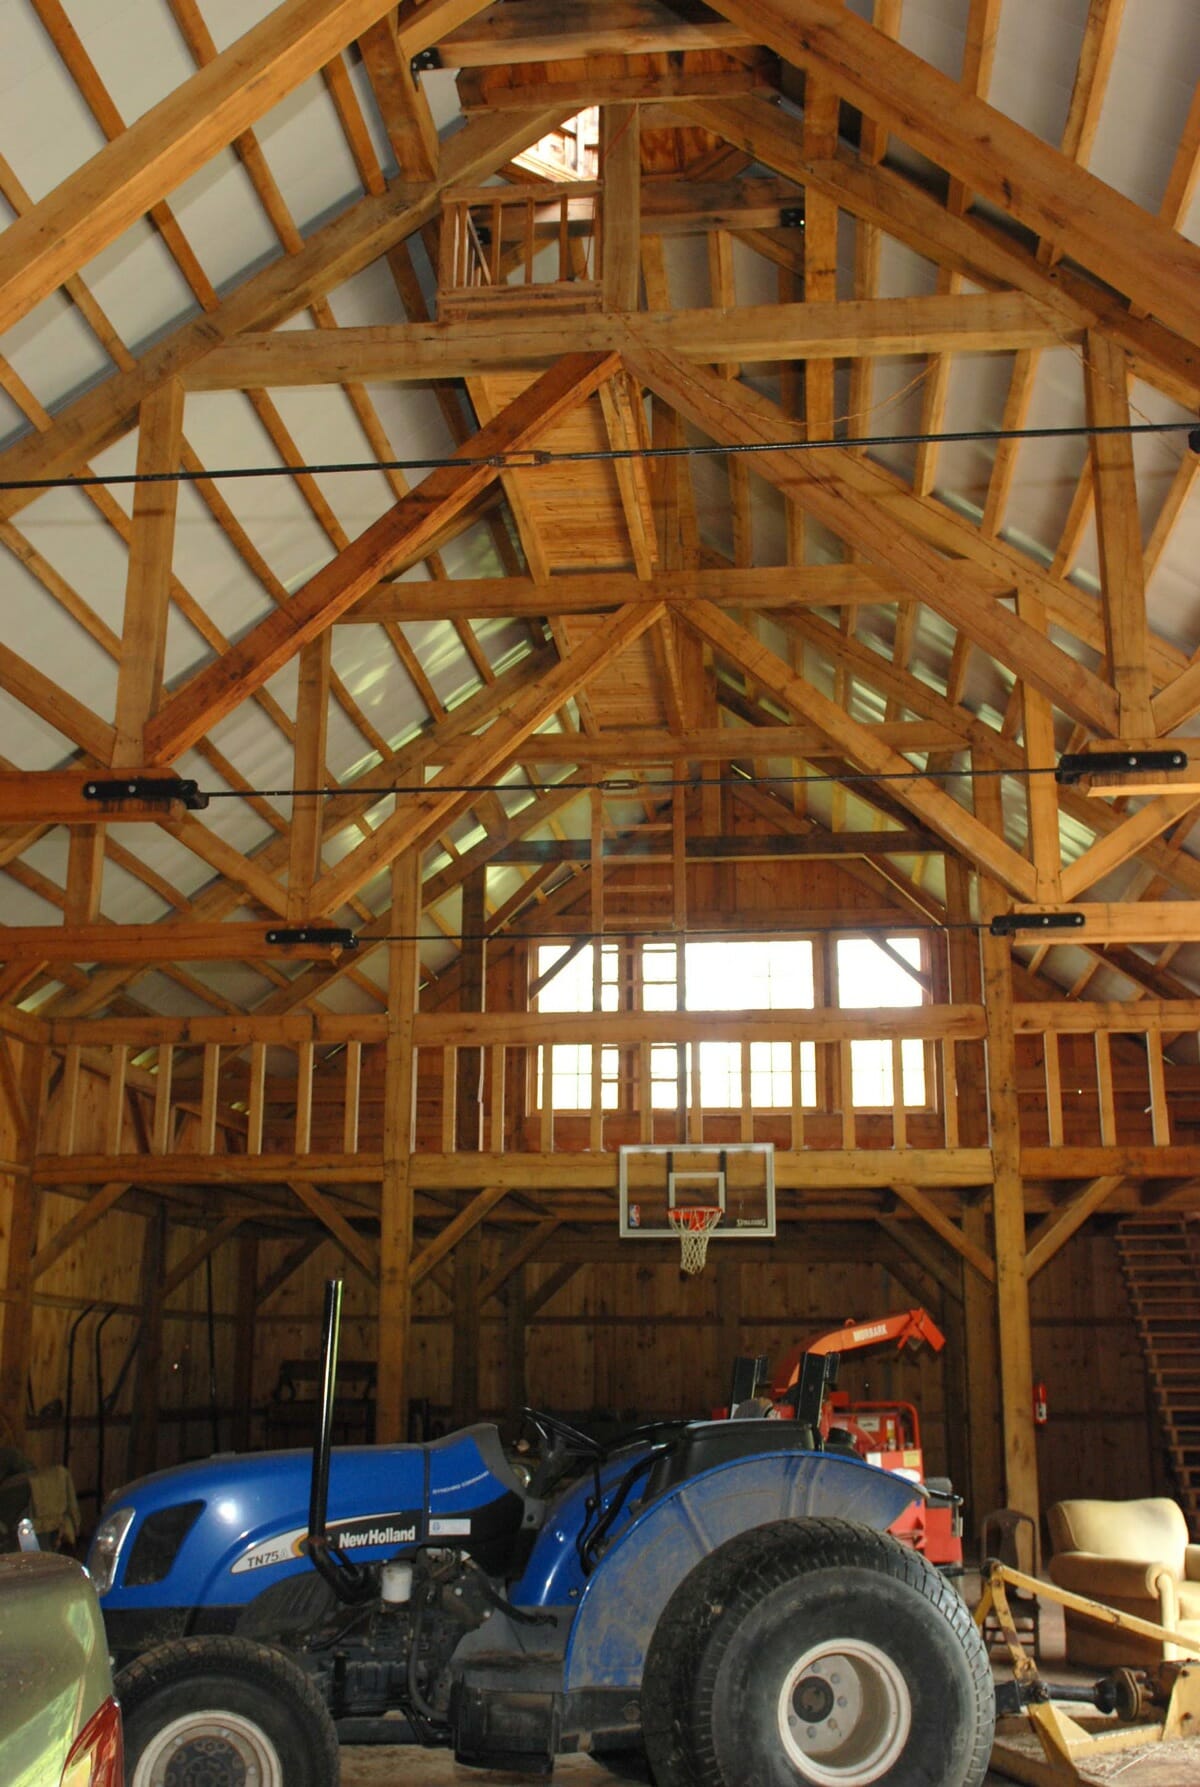 traditional timber frame barn